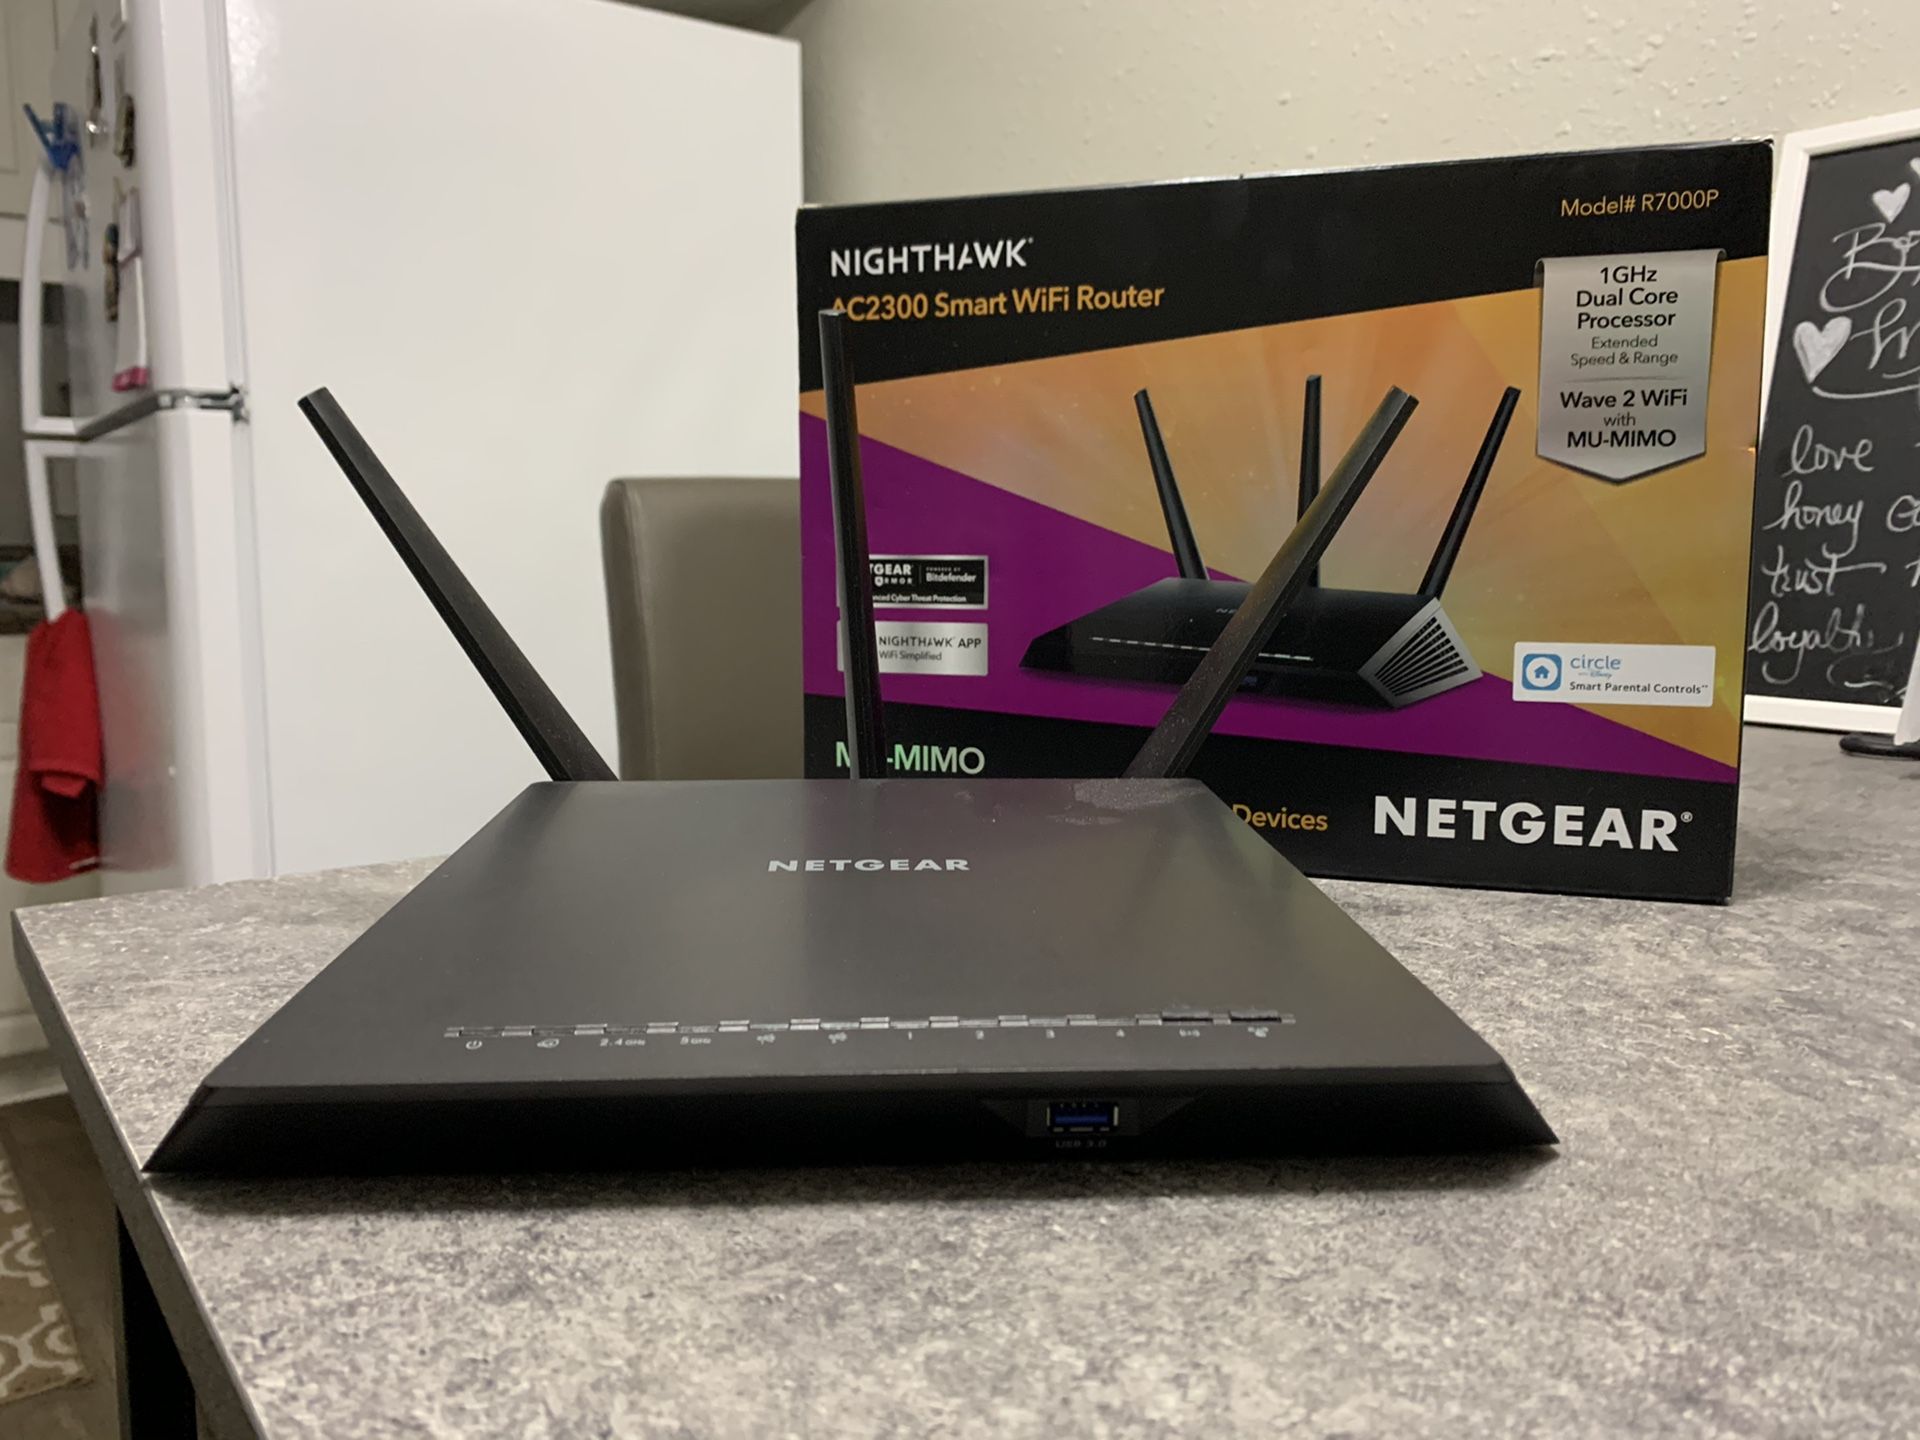 Netgear Nighthawk R7000P AC2300 Smart WiFi Router